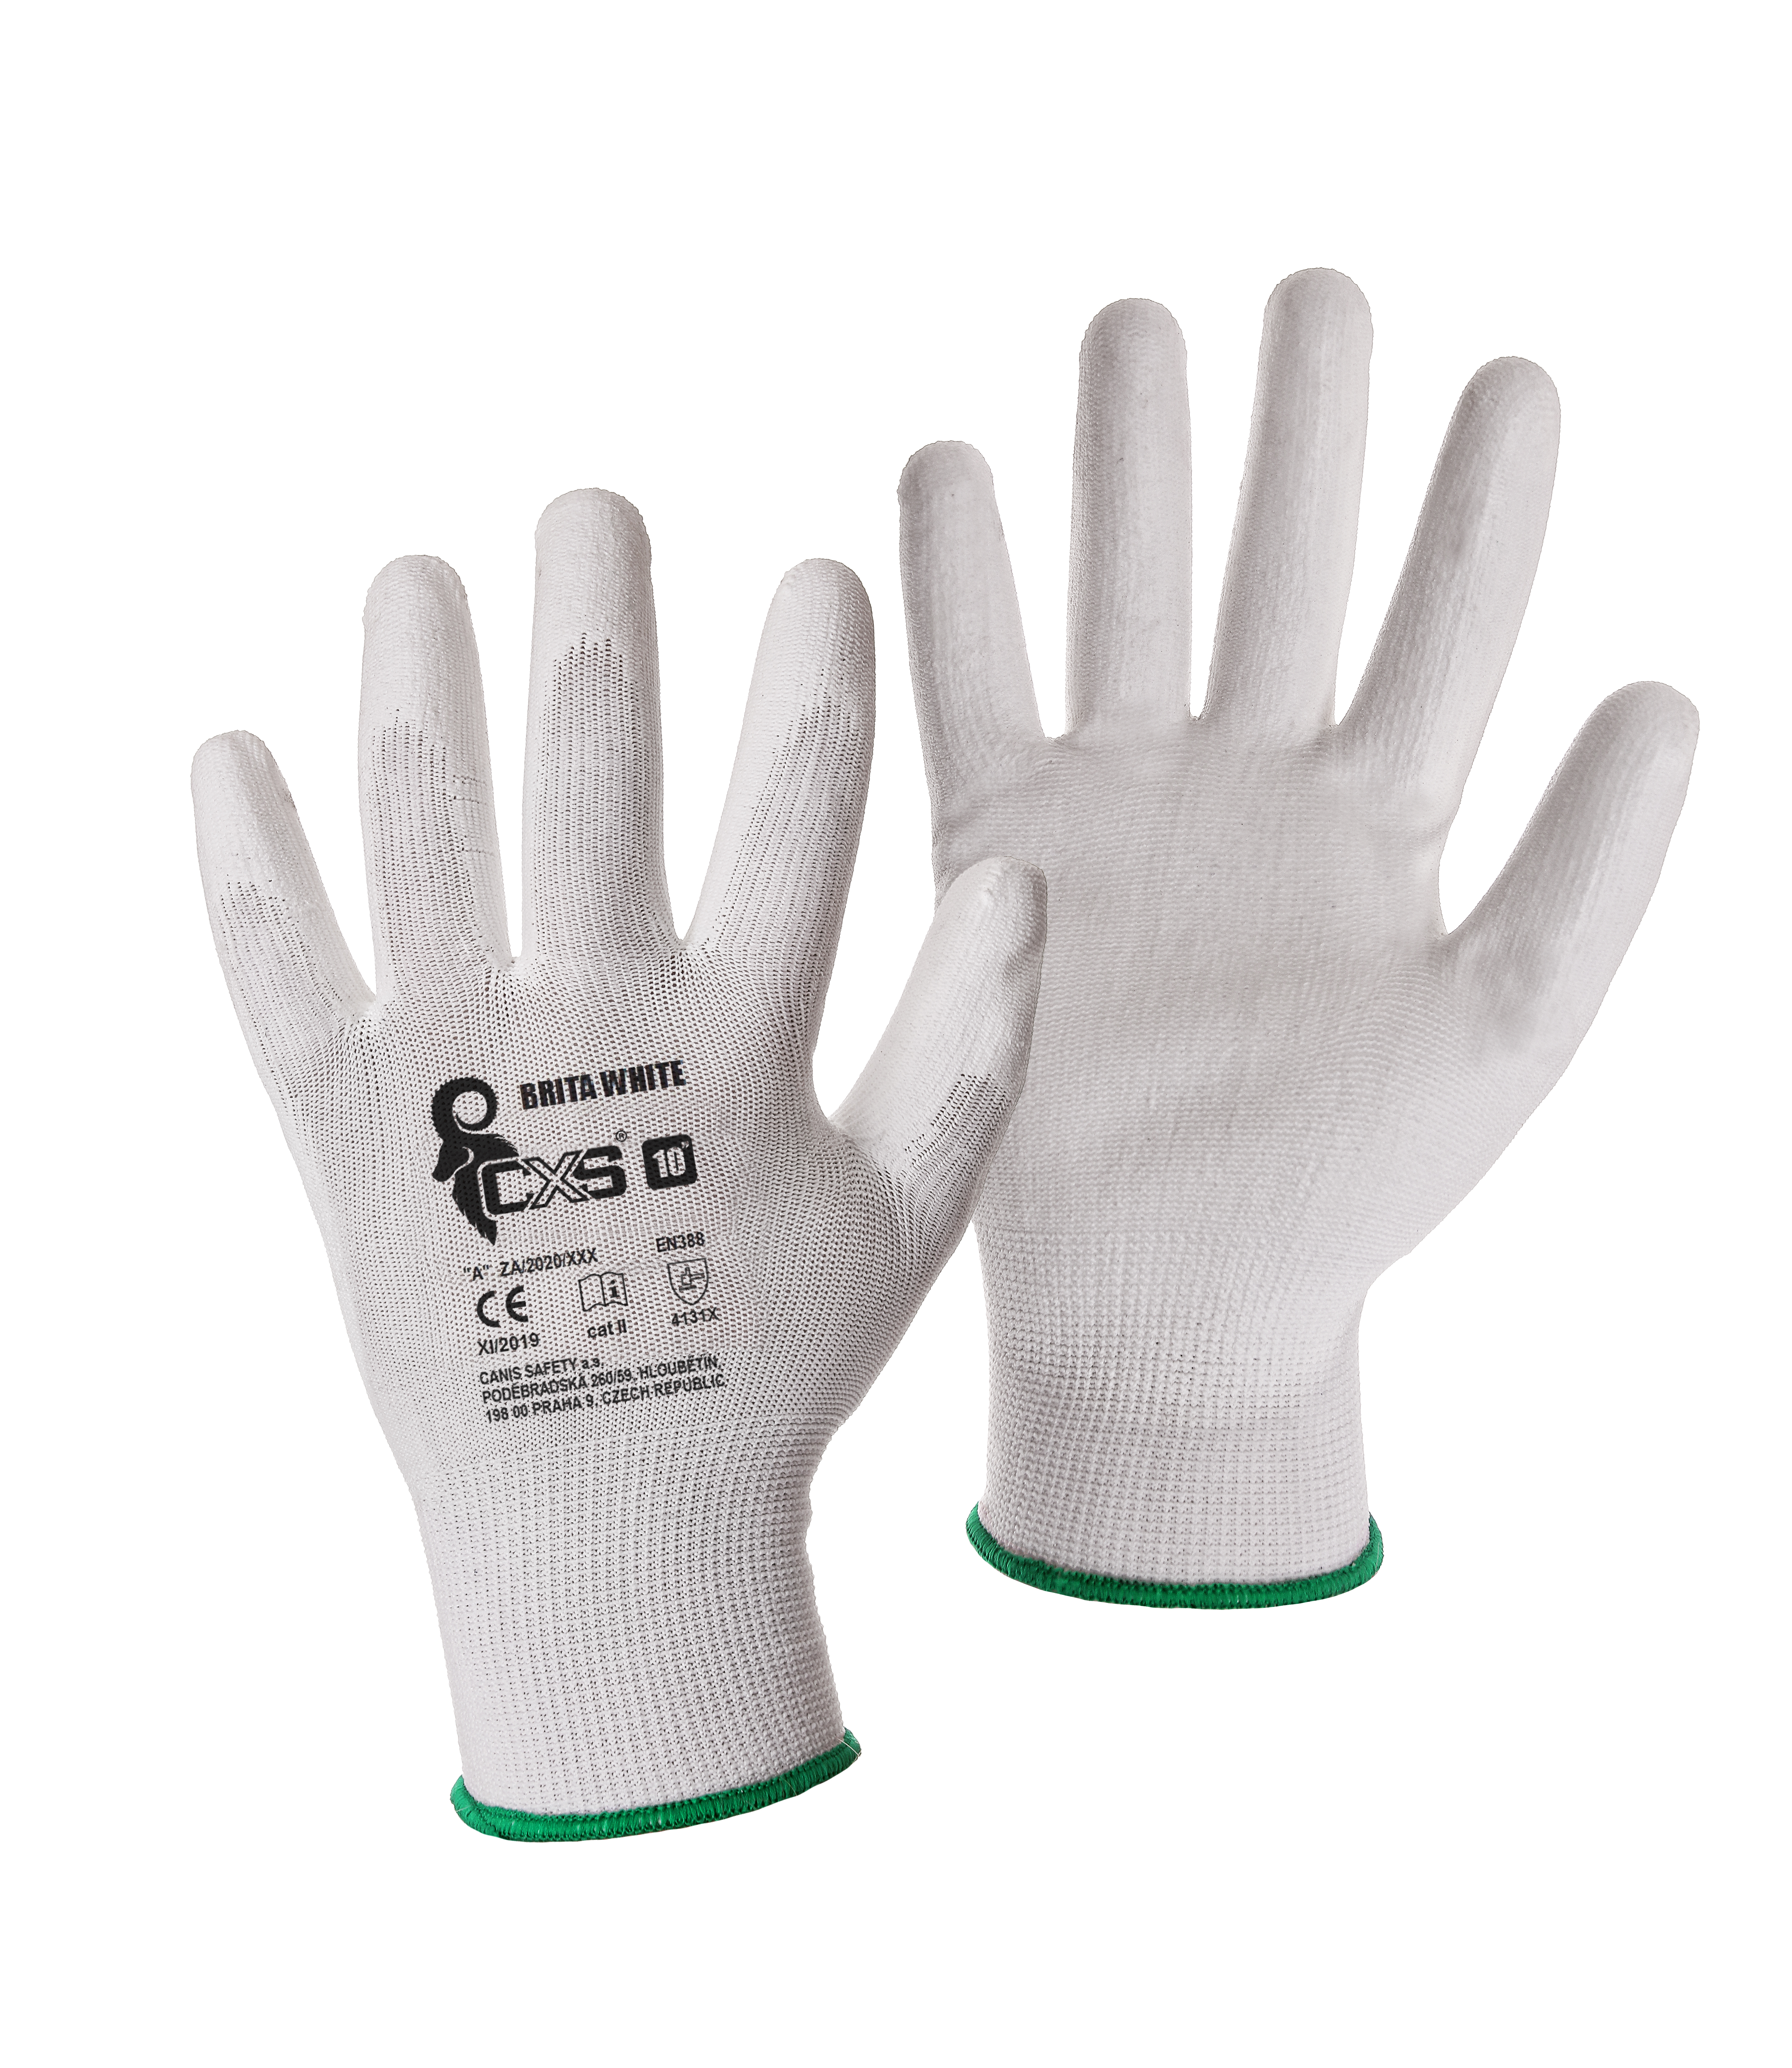 rukavice BRITA WHITE, s PU dlaní a úpletem, velikost 6 0.02 Kg TOP Sklad4 606040 113